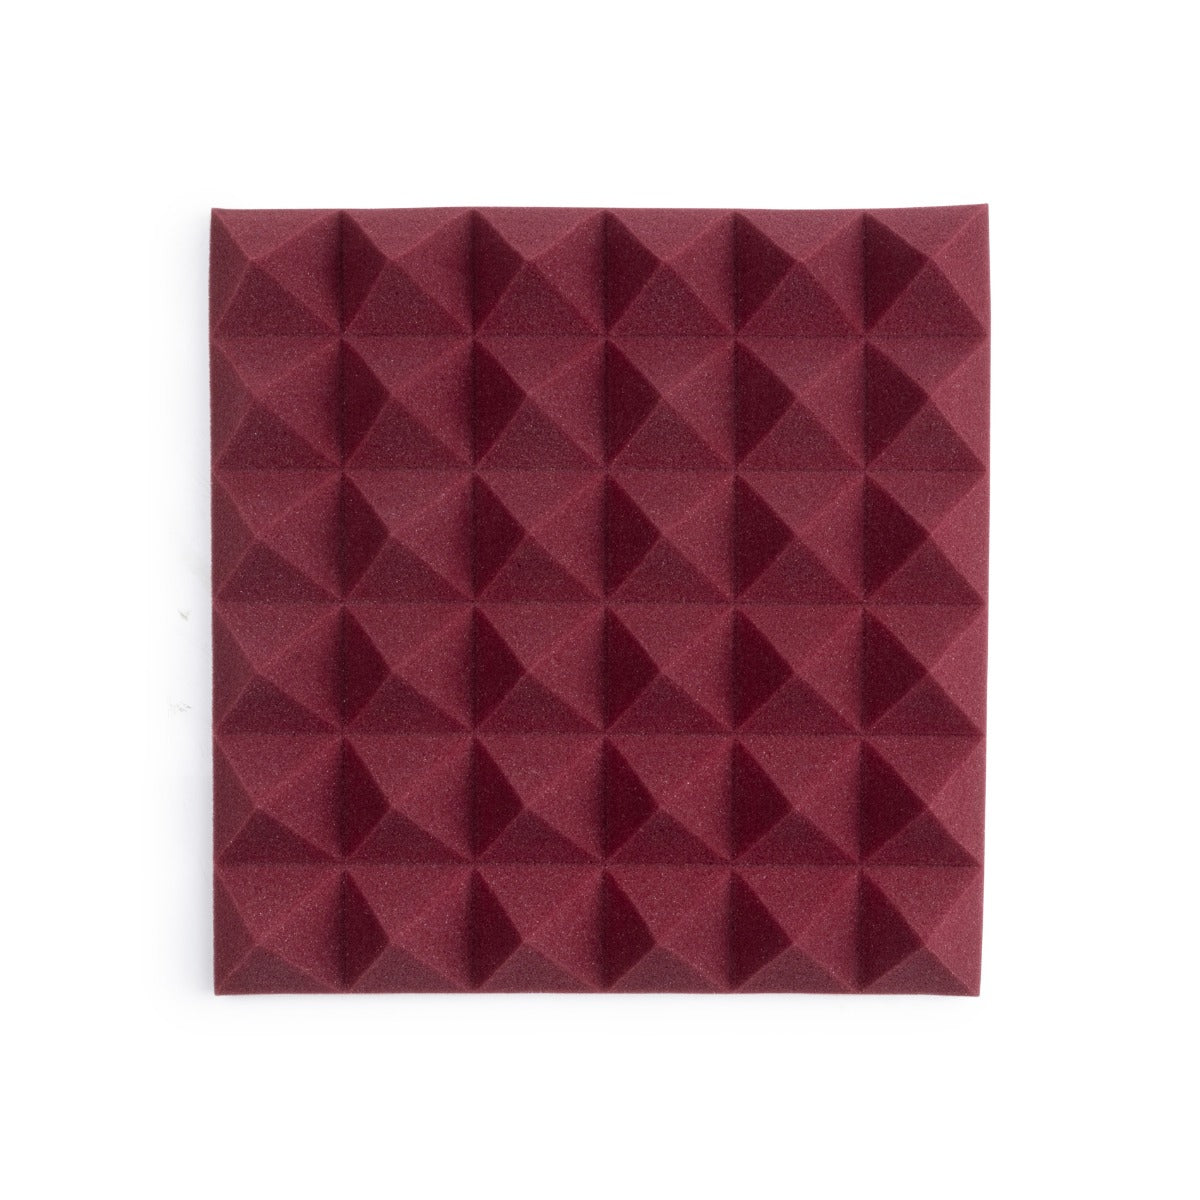 Image showing a single acoustic foam panel